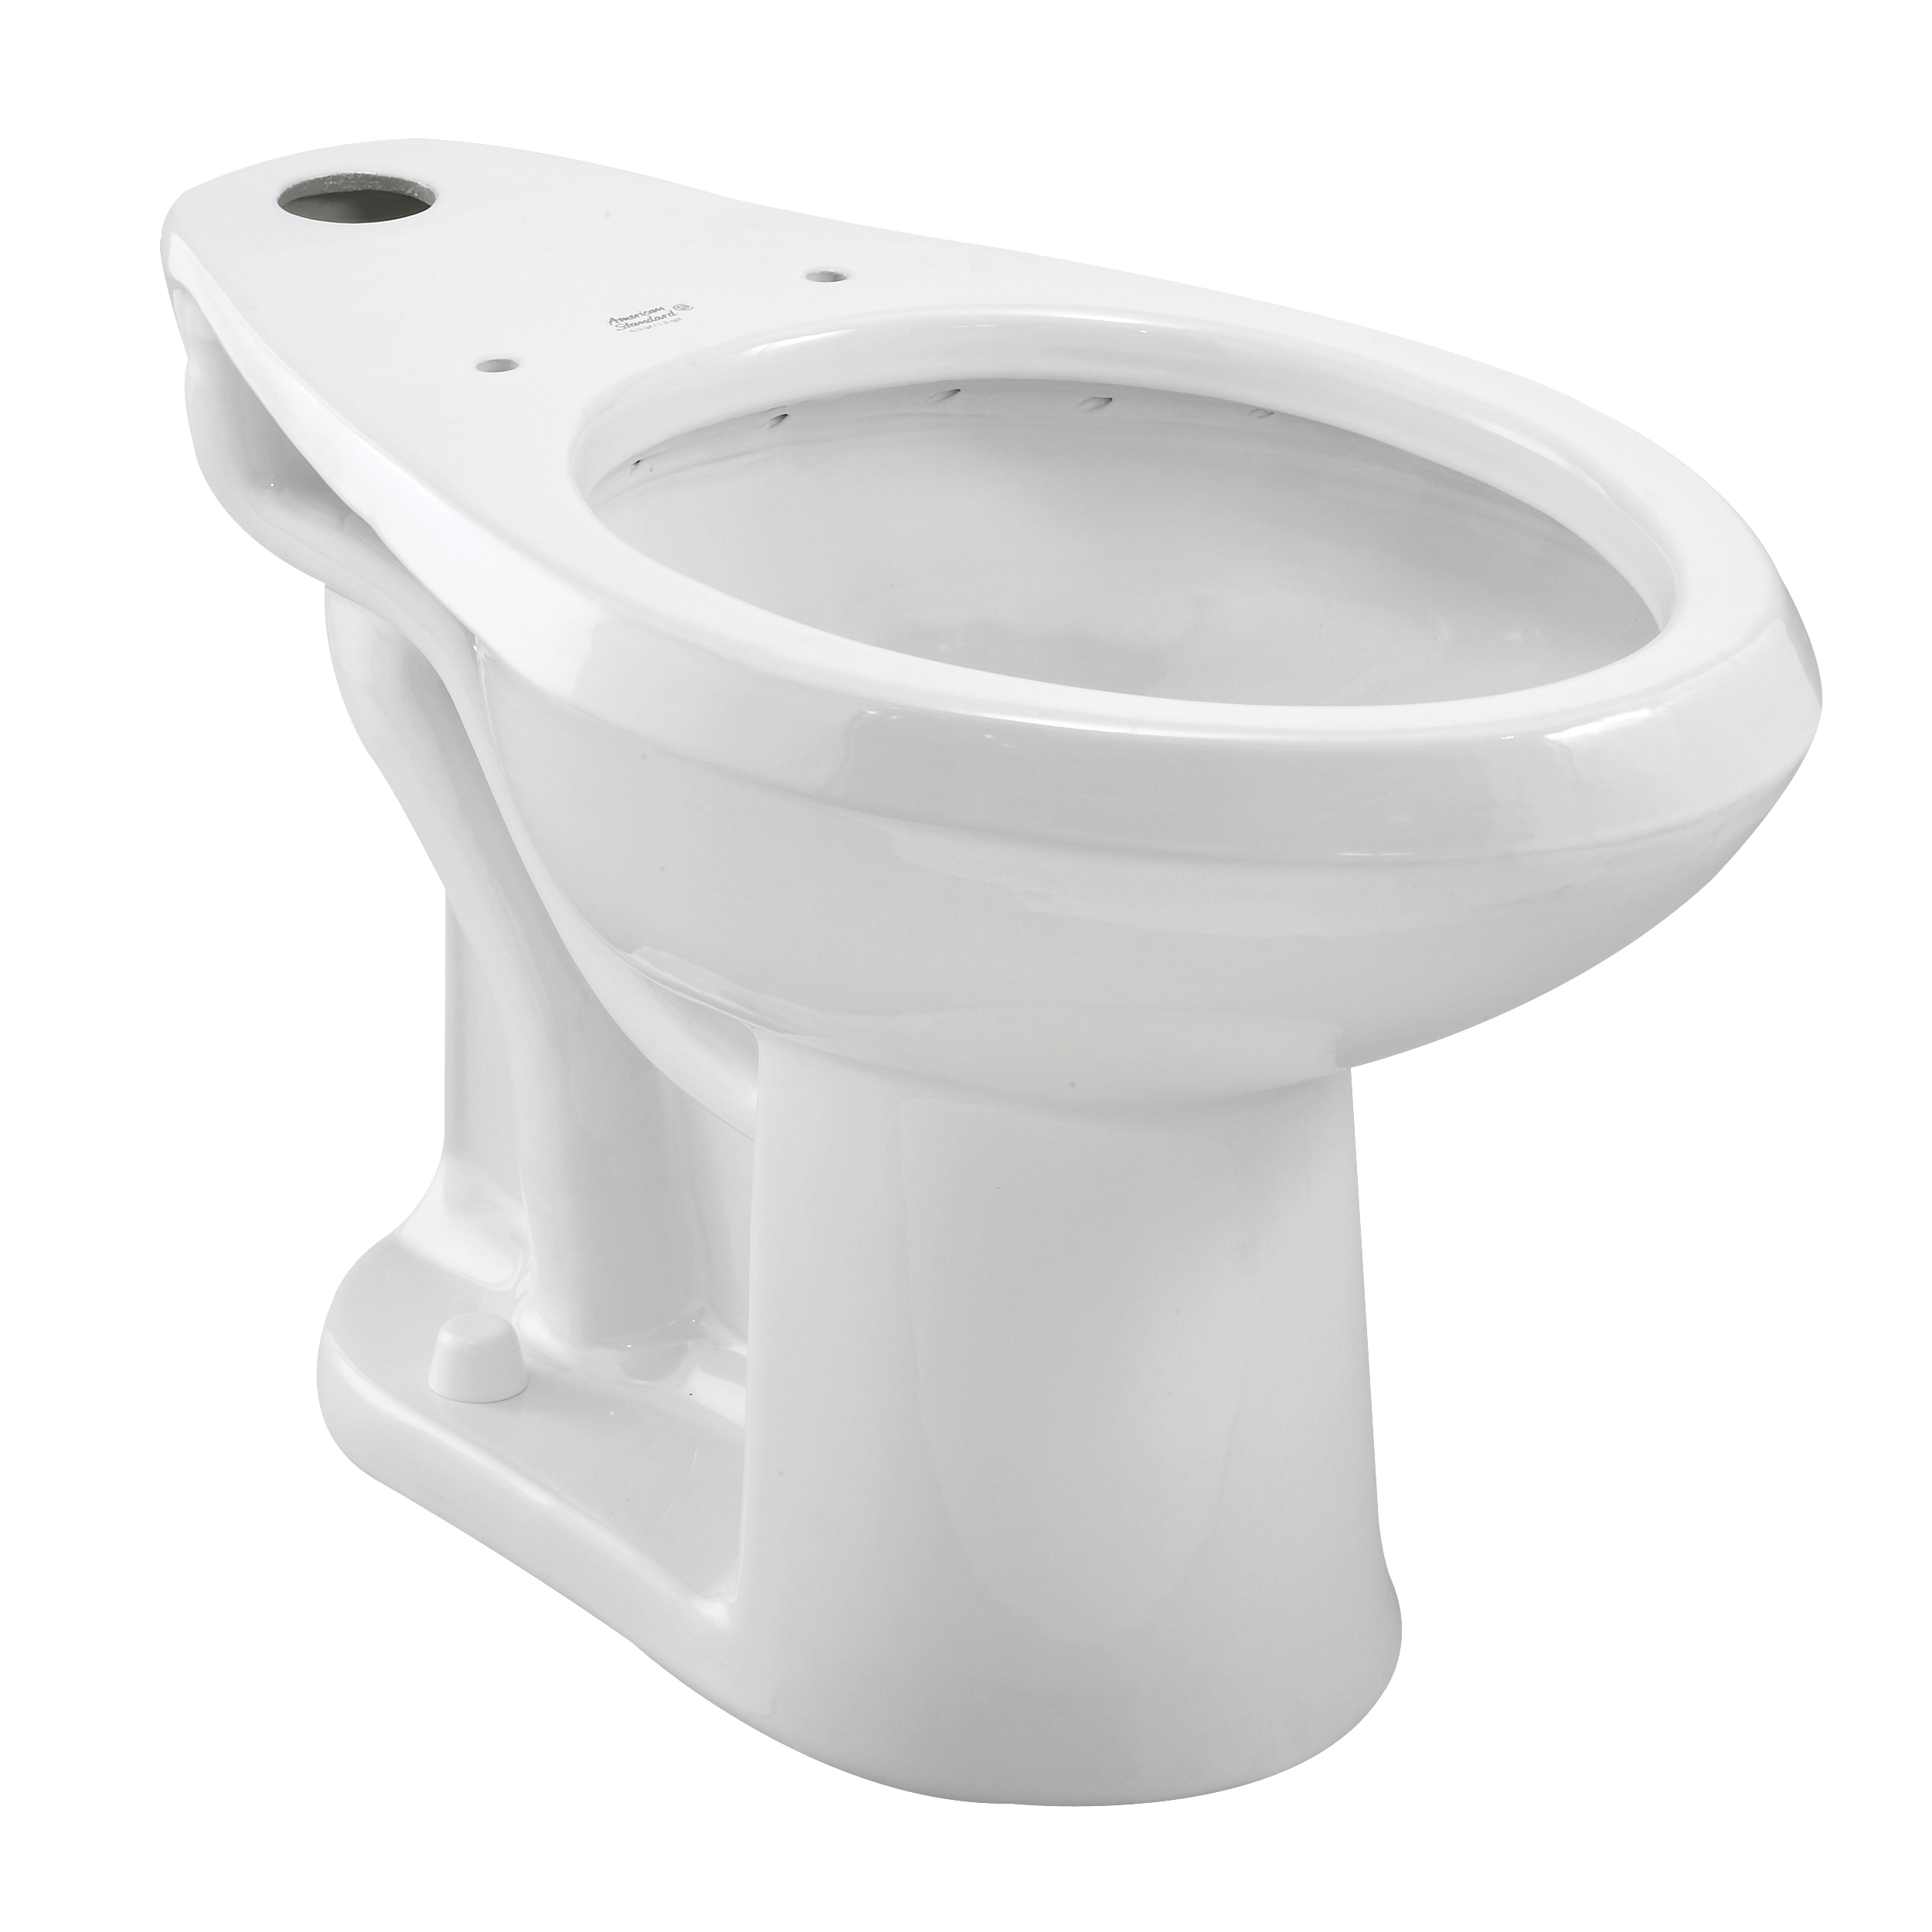 American Standard Madera Series 3043.001.020 Toilet Bowl, Elongated, Vitreous China, White, Floor Mounting